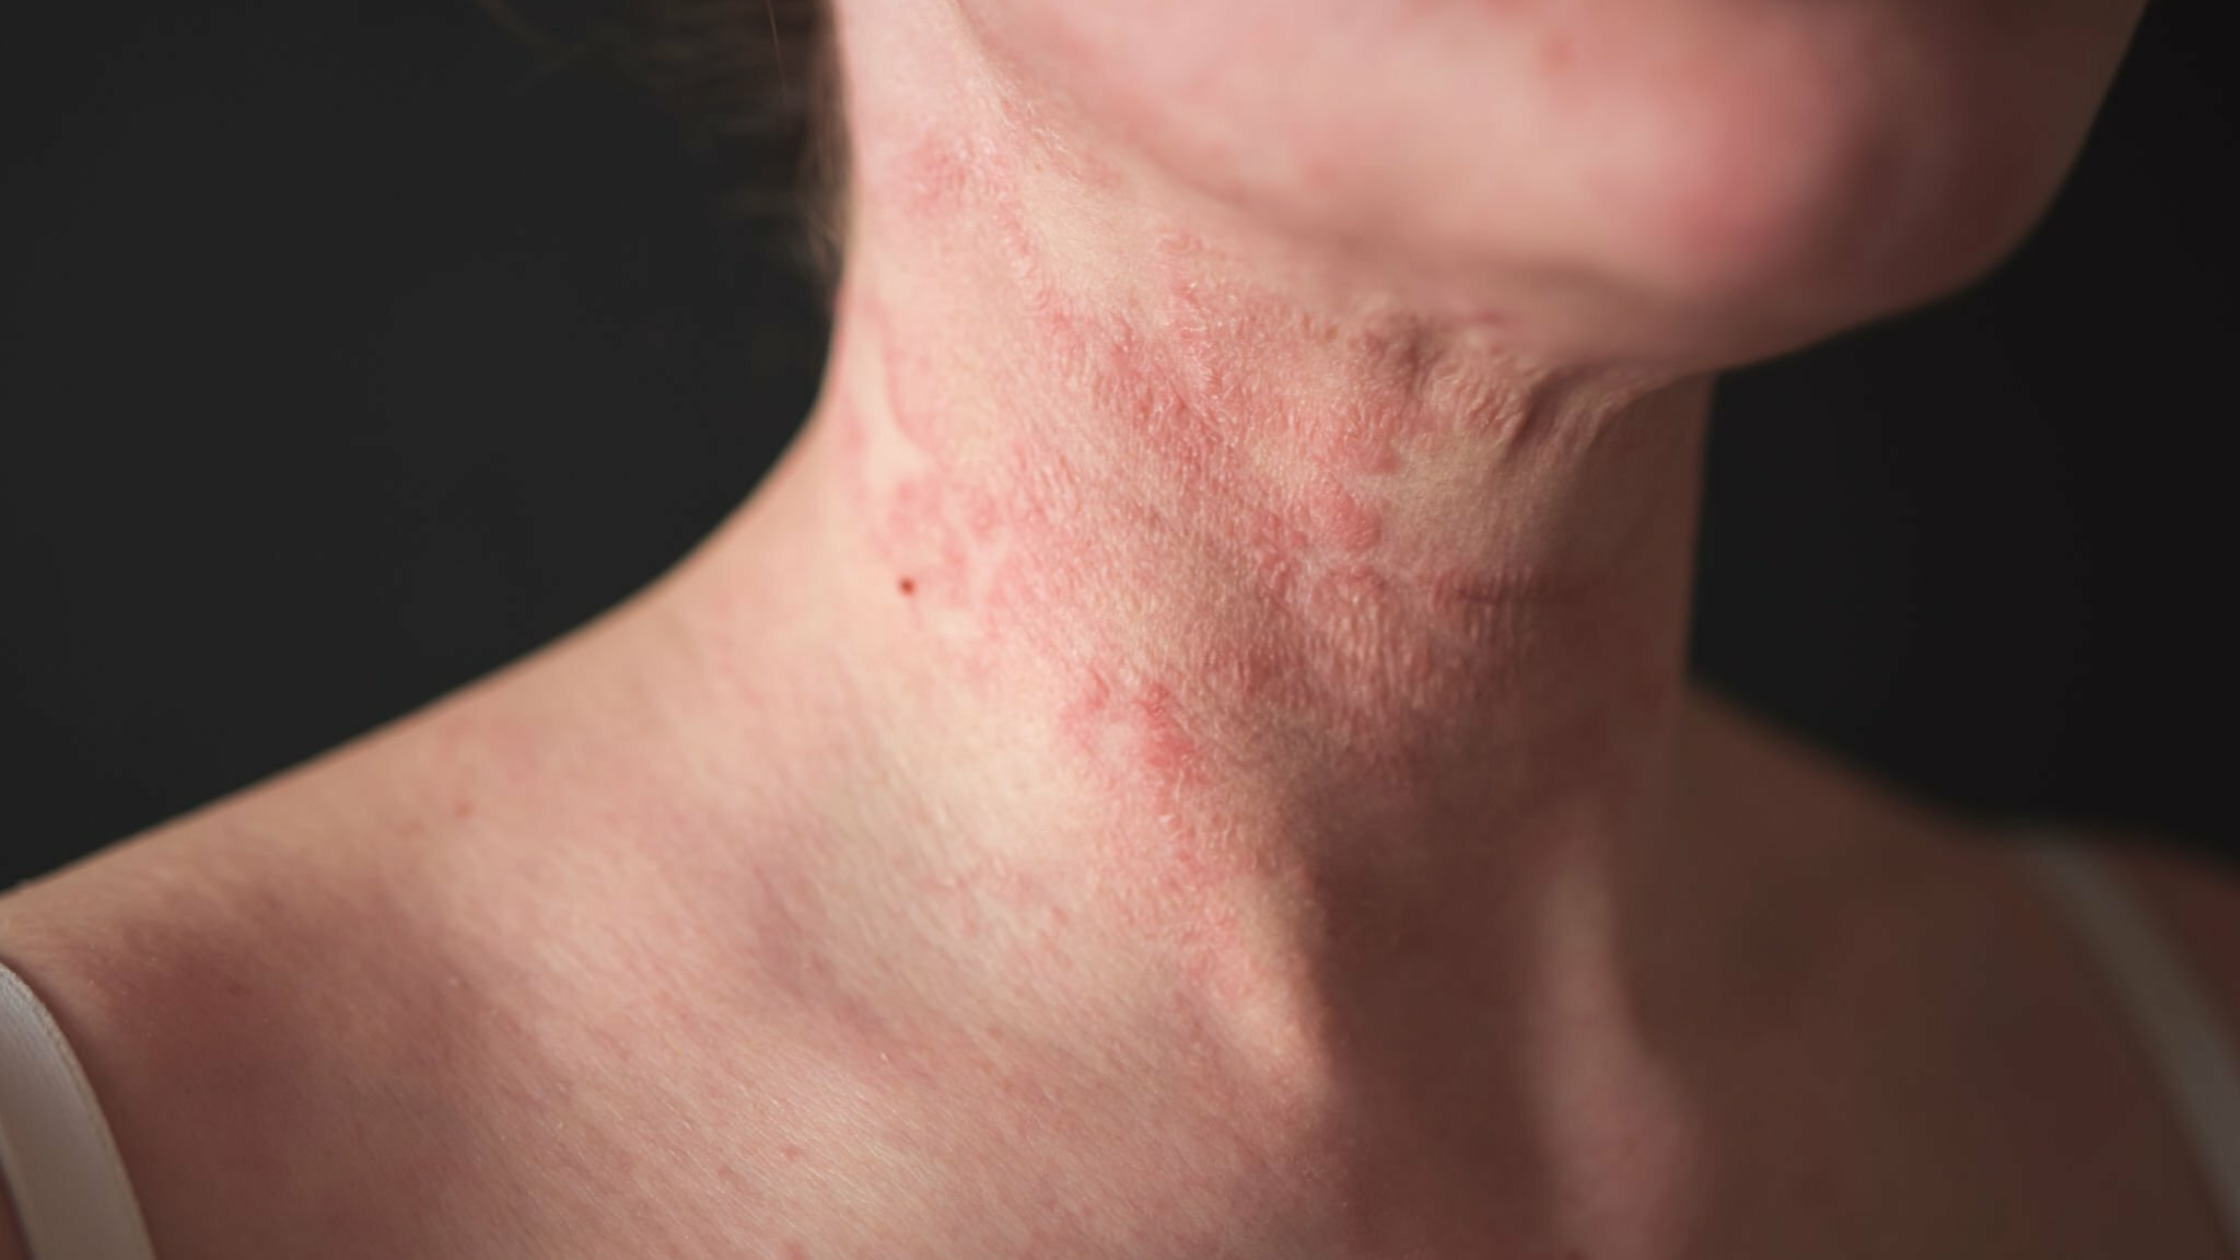 What Does Eczema Look Like?